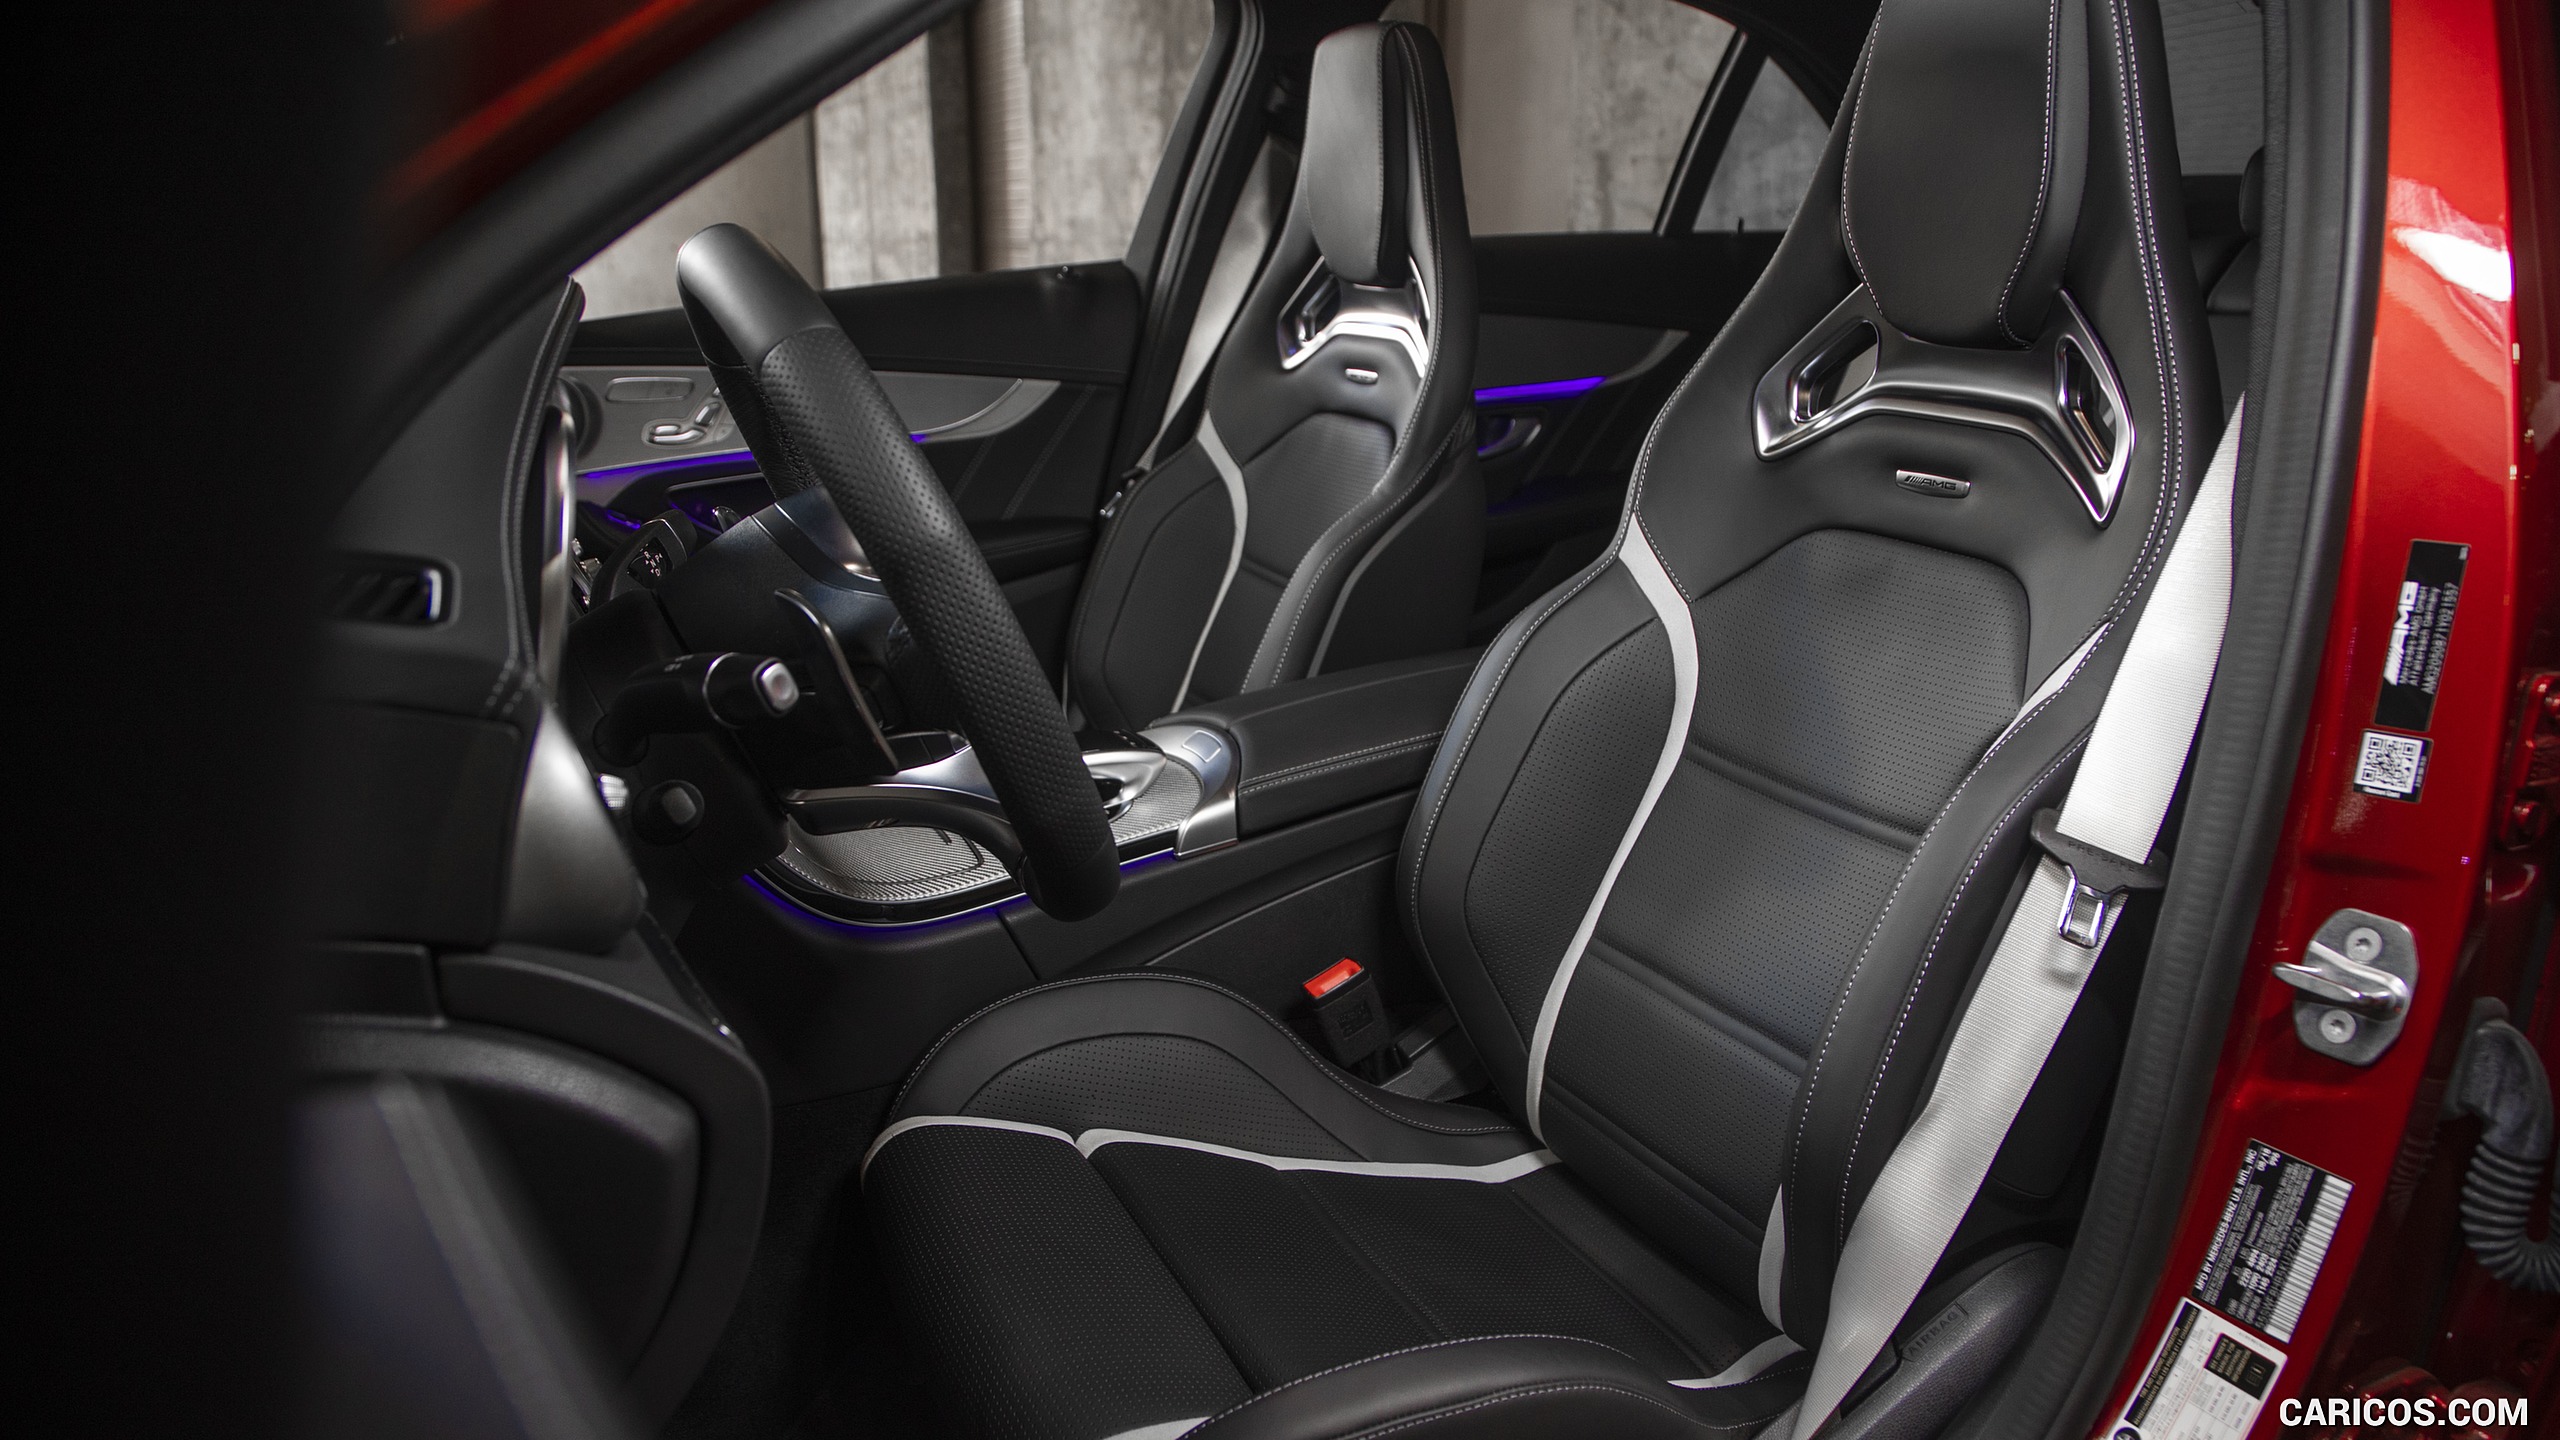 2019 Mercedes-AMG C63 S Sedan (US-Sedan) - Interior, Front Seats, #105 of 115